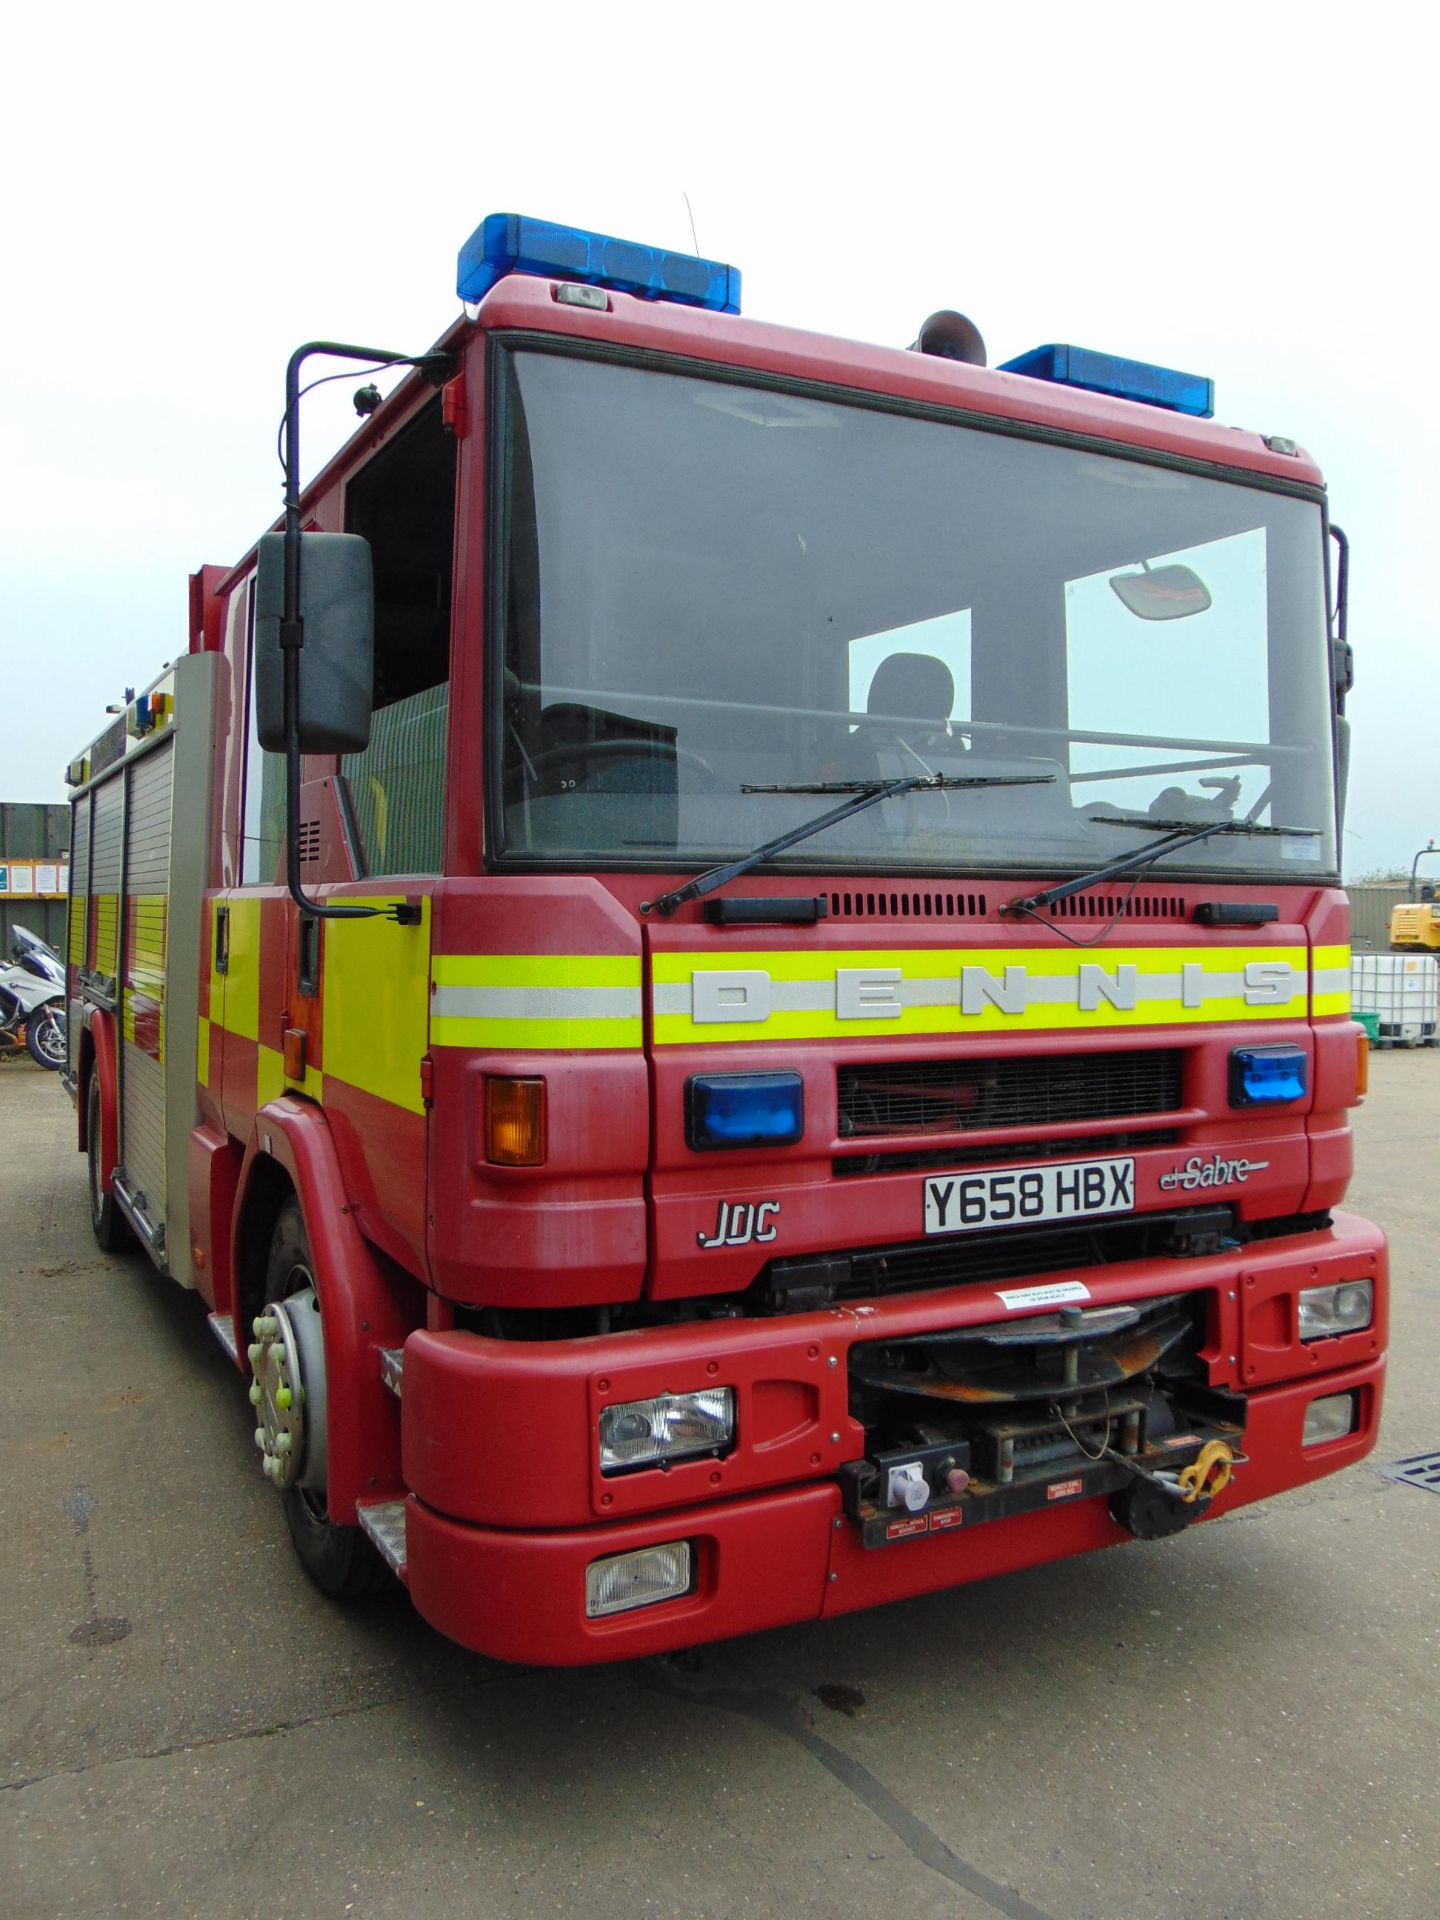 2001 Dennis Sabre Fire Engine - Cummins C260 Diesel Engine - Image 20 of 91